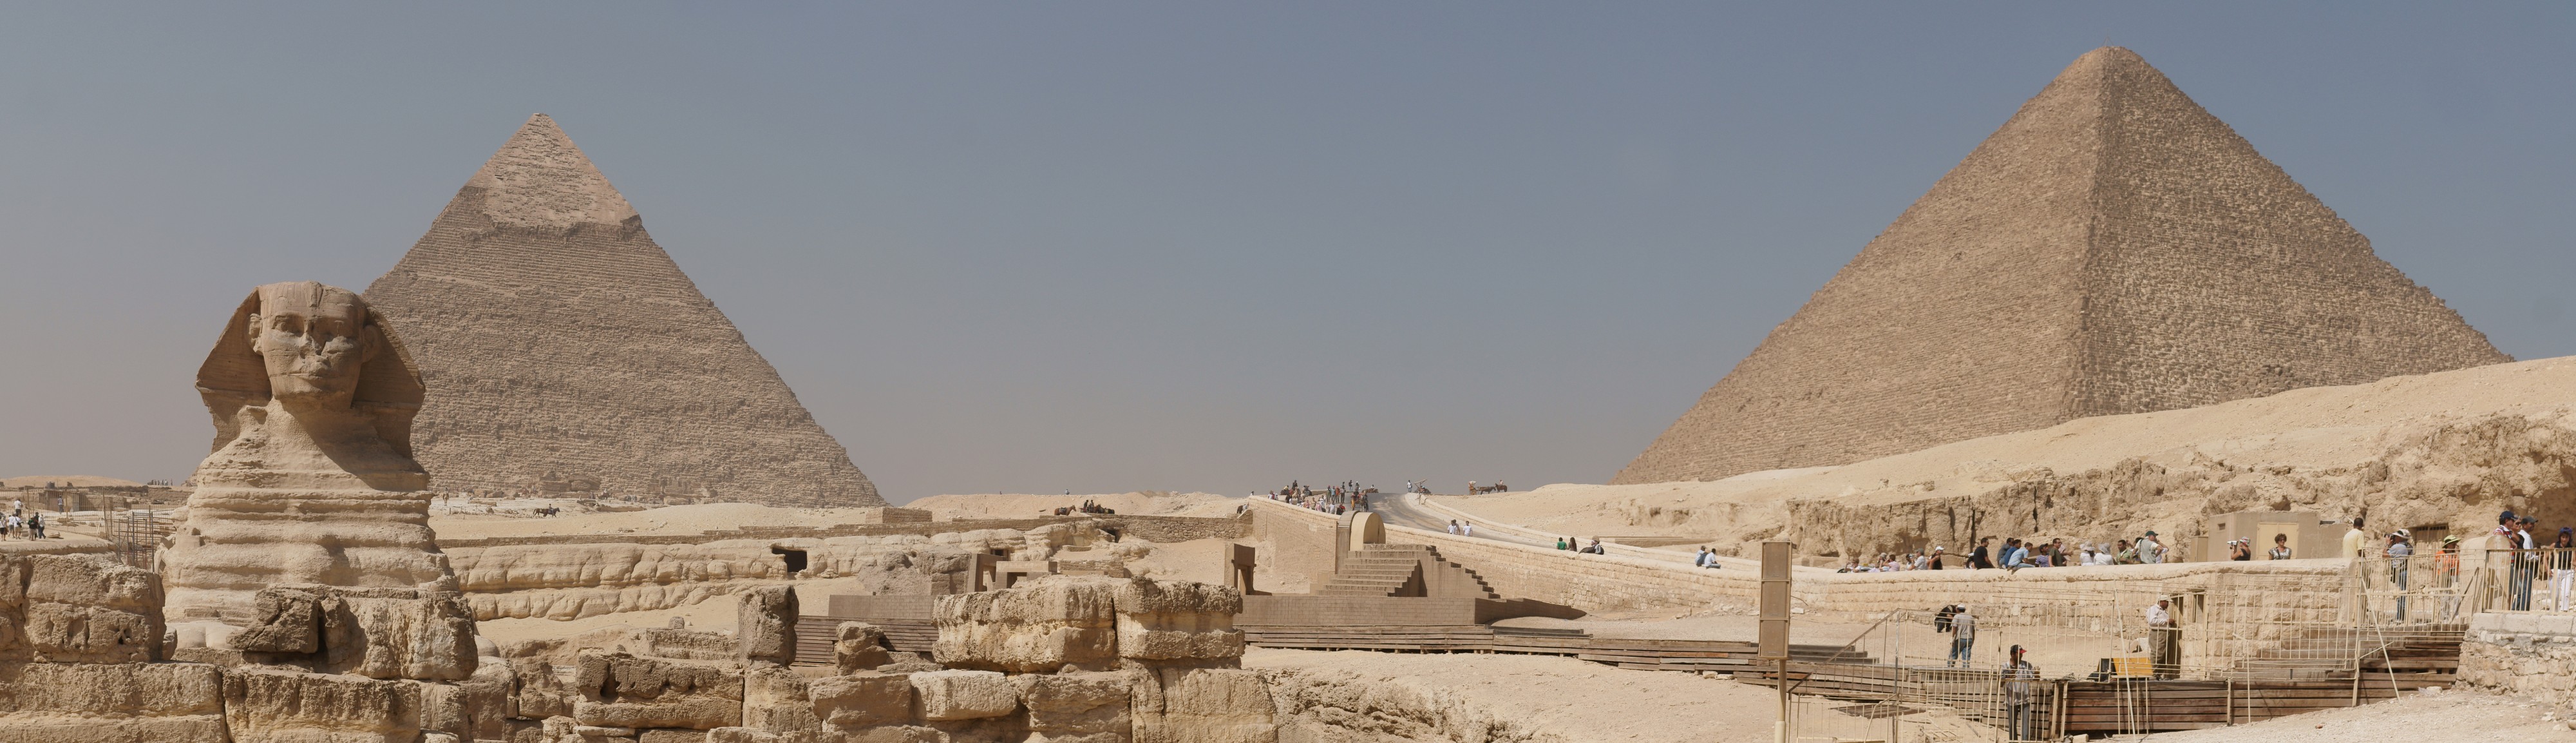 Sphinx and pyramids of Giza panorama